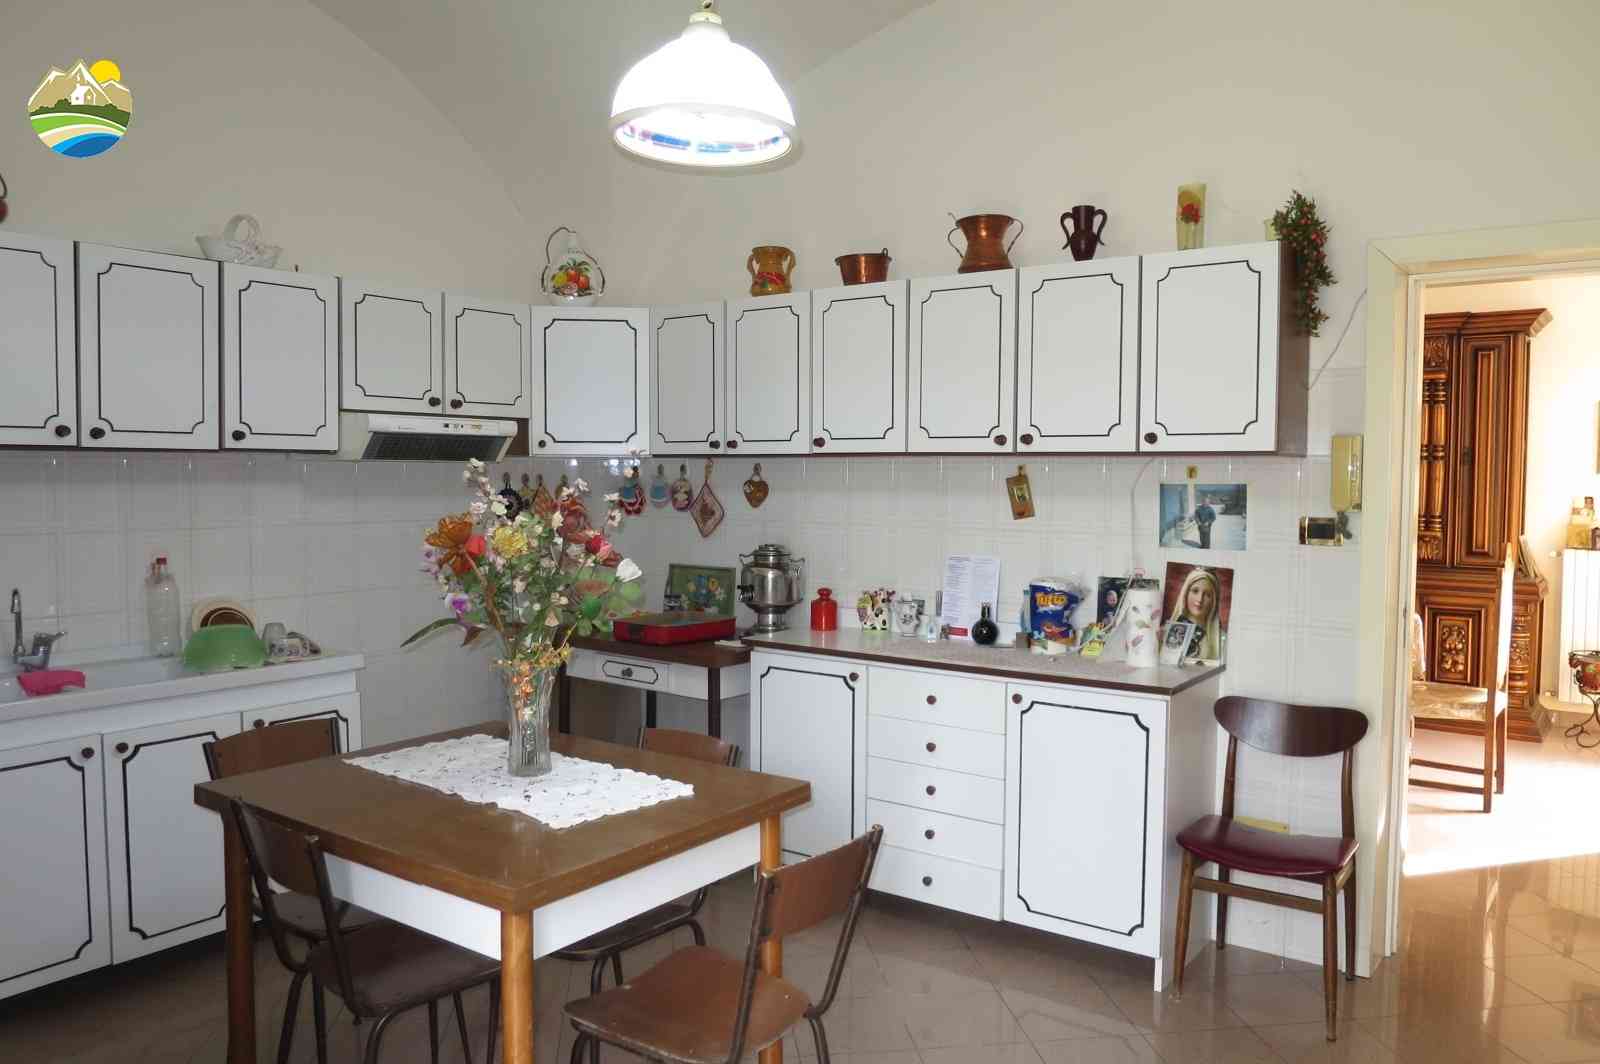 Casa in paese Casa in paese in vendita Picciano (PE), Casa Rondine - Picciano - EUR 88.783 650